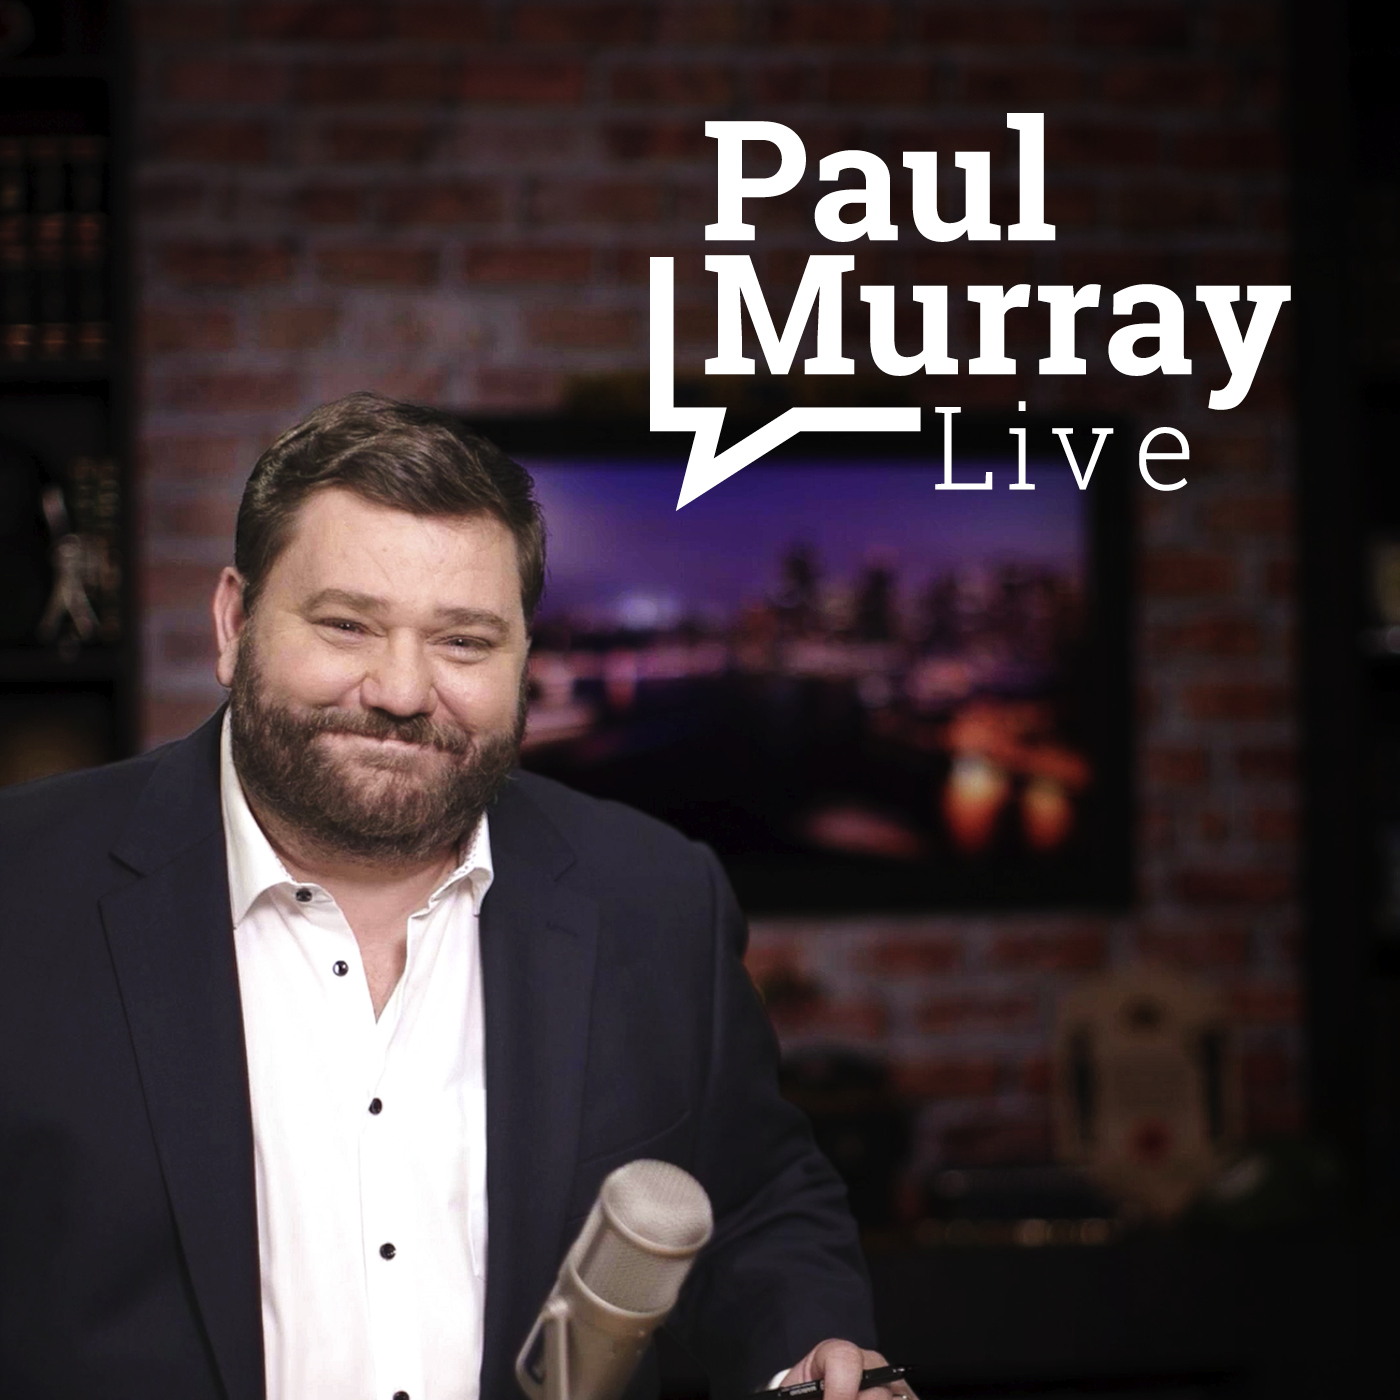 Paul Murray Live, Tuesday 21 June